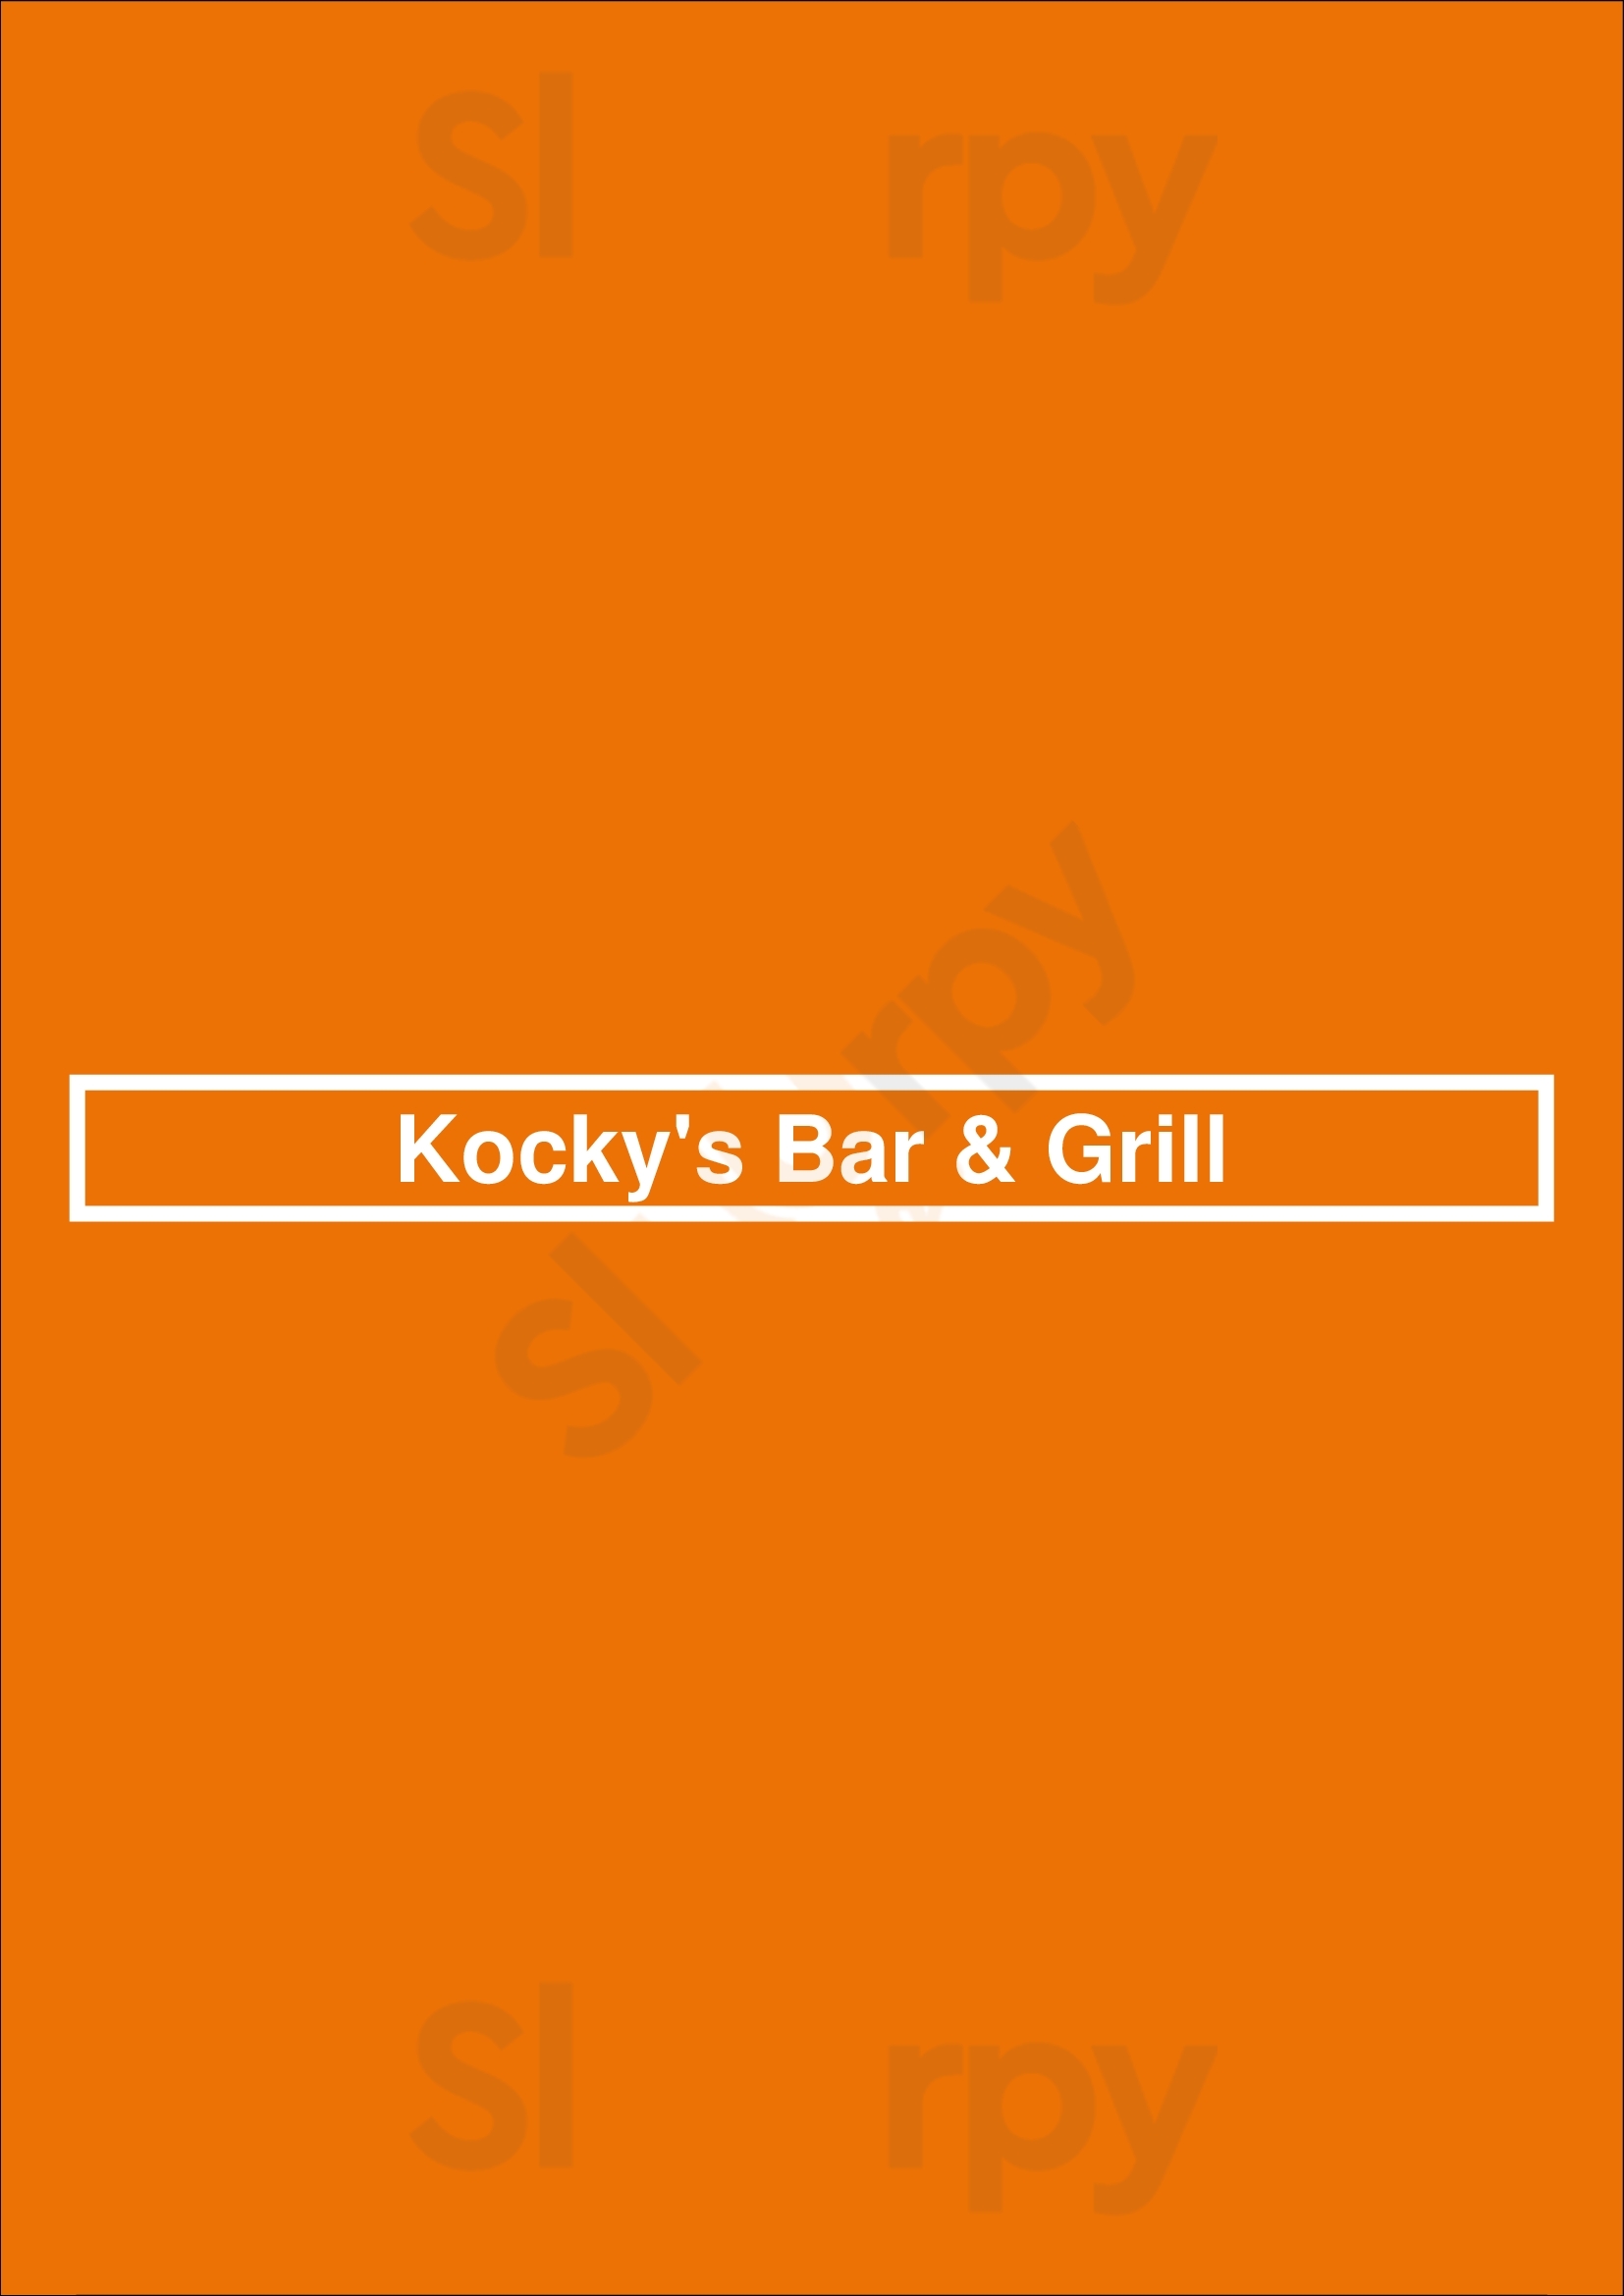 Kocky's Bar And Grilll Fresno Menu - 1